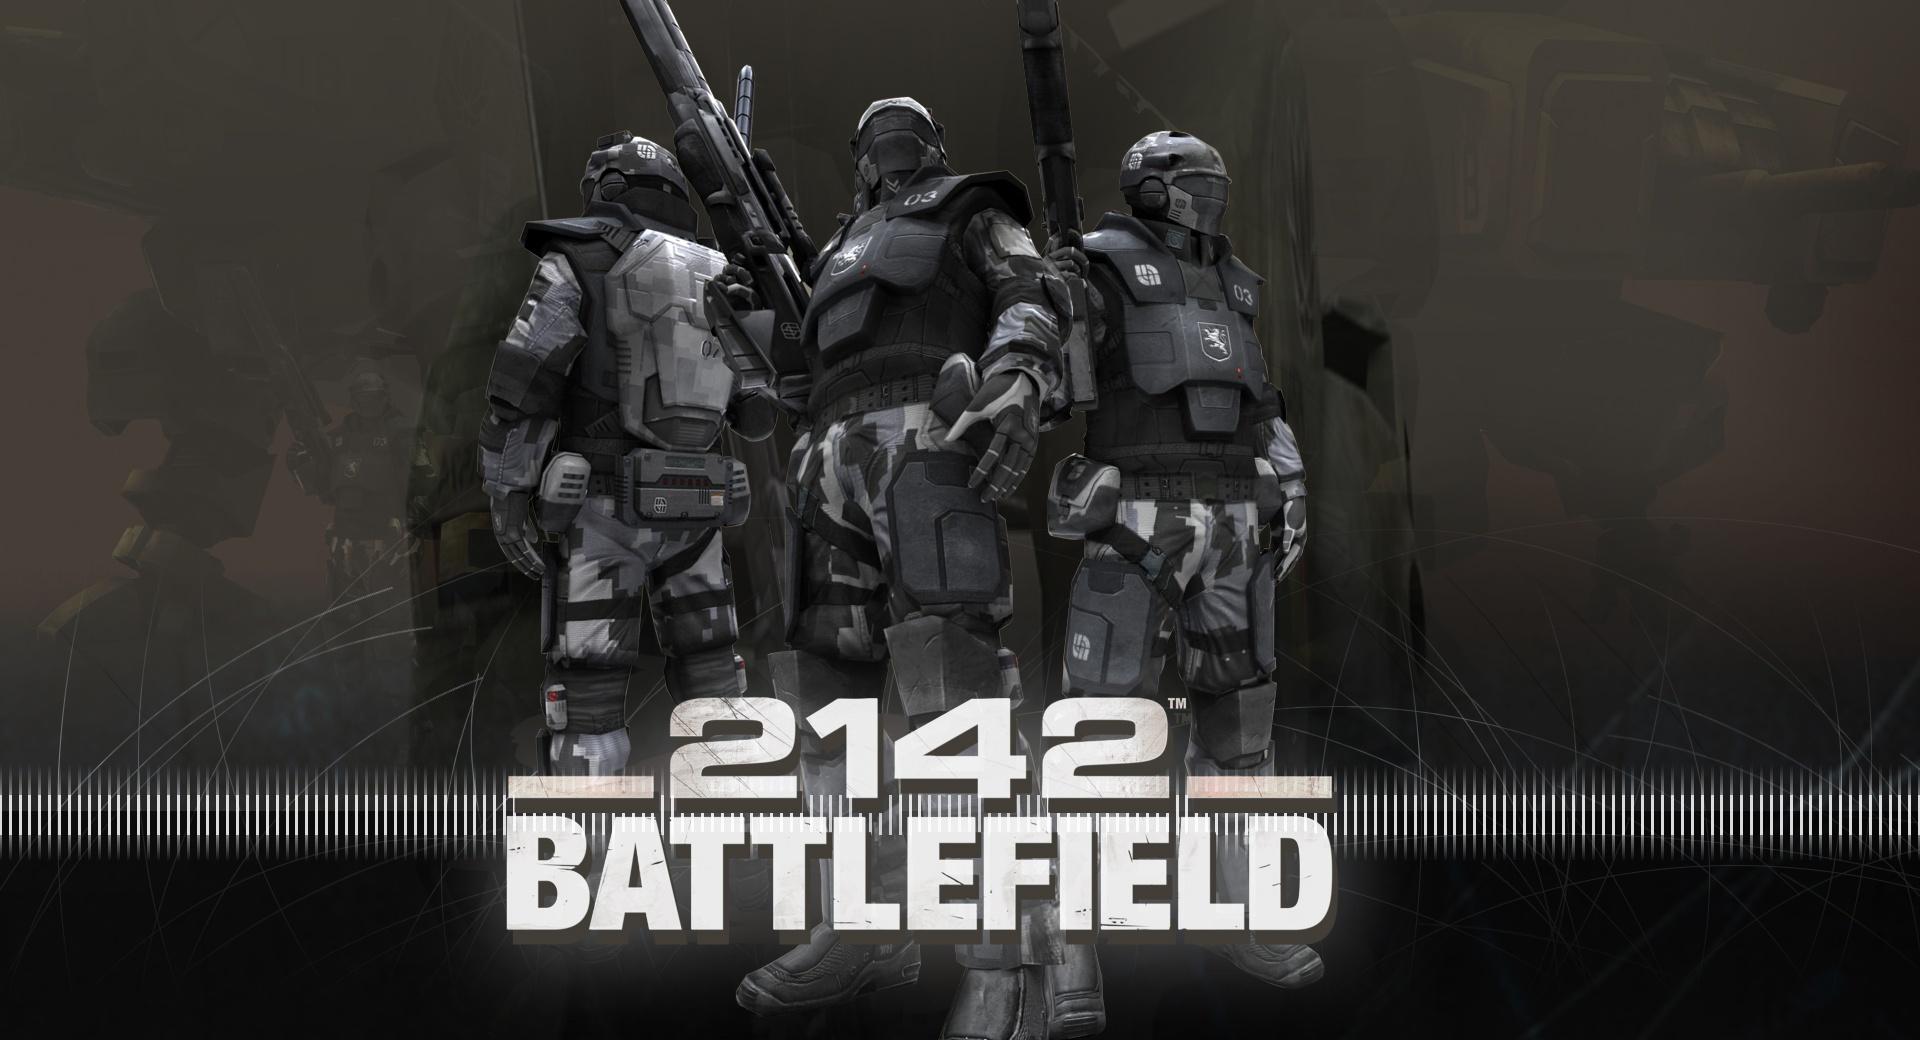 Battlefield 2142 at 1024 x 1024 iPad size wallpapers HD quality